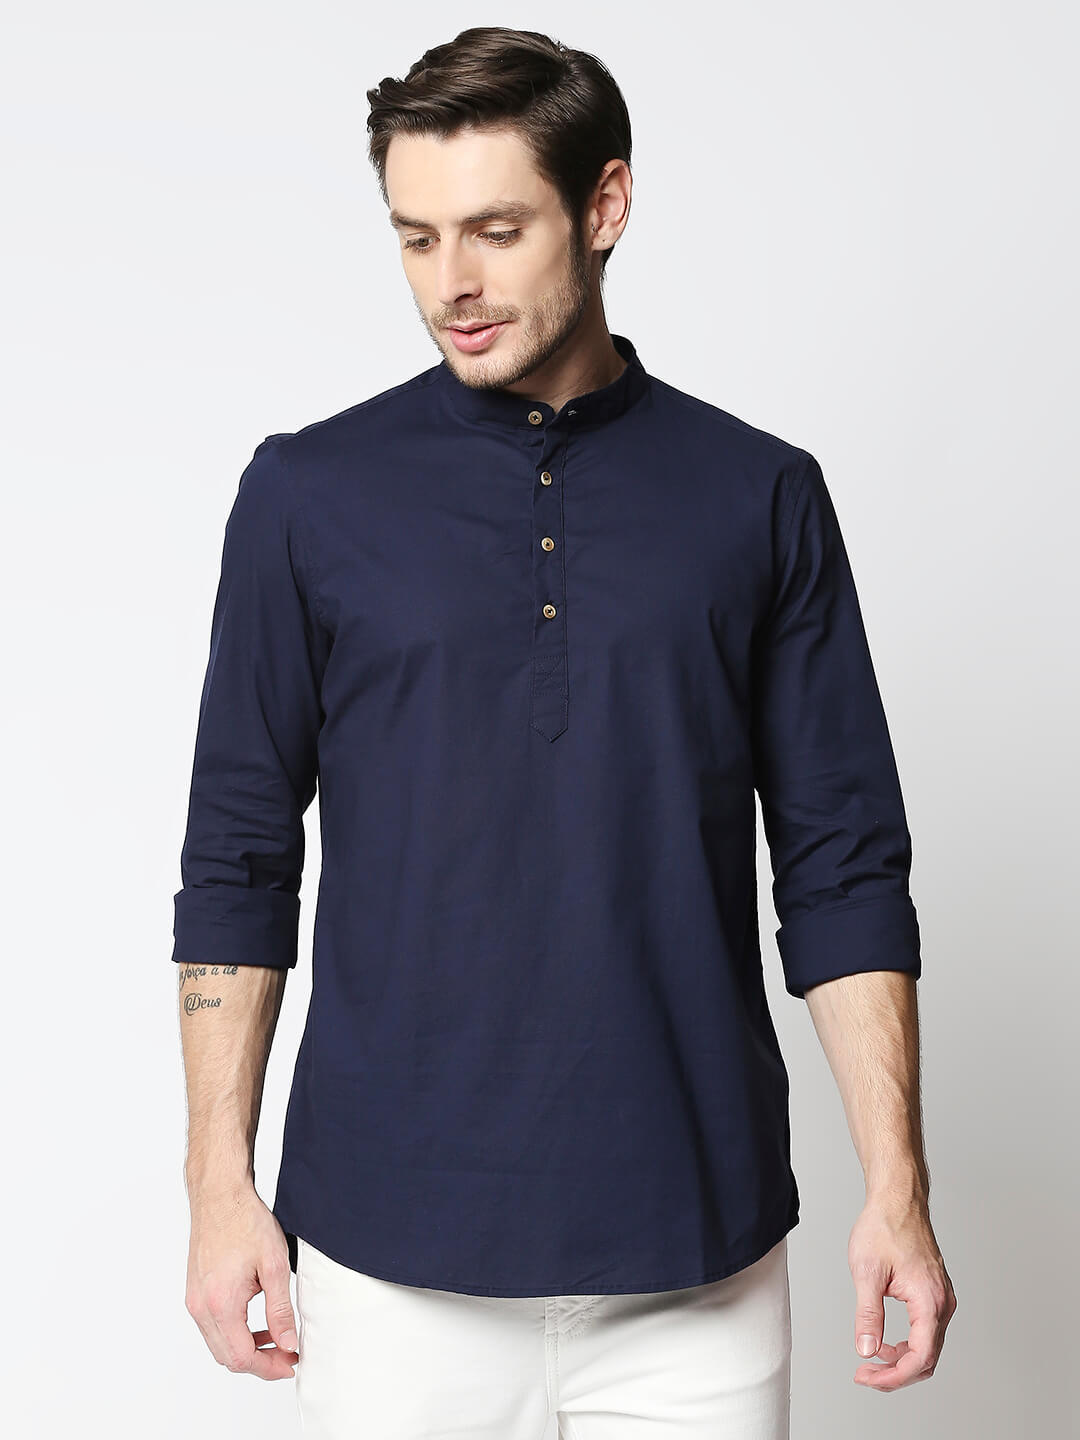 The Manaca Mandarin Collar Plain Shirt - Navy Blue